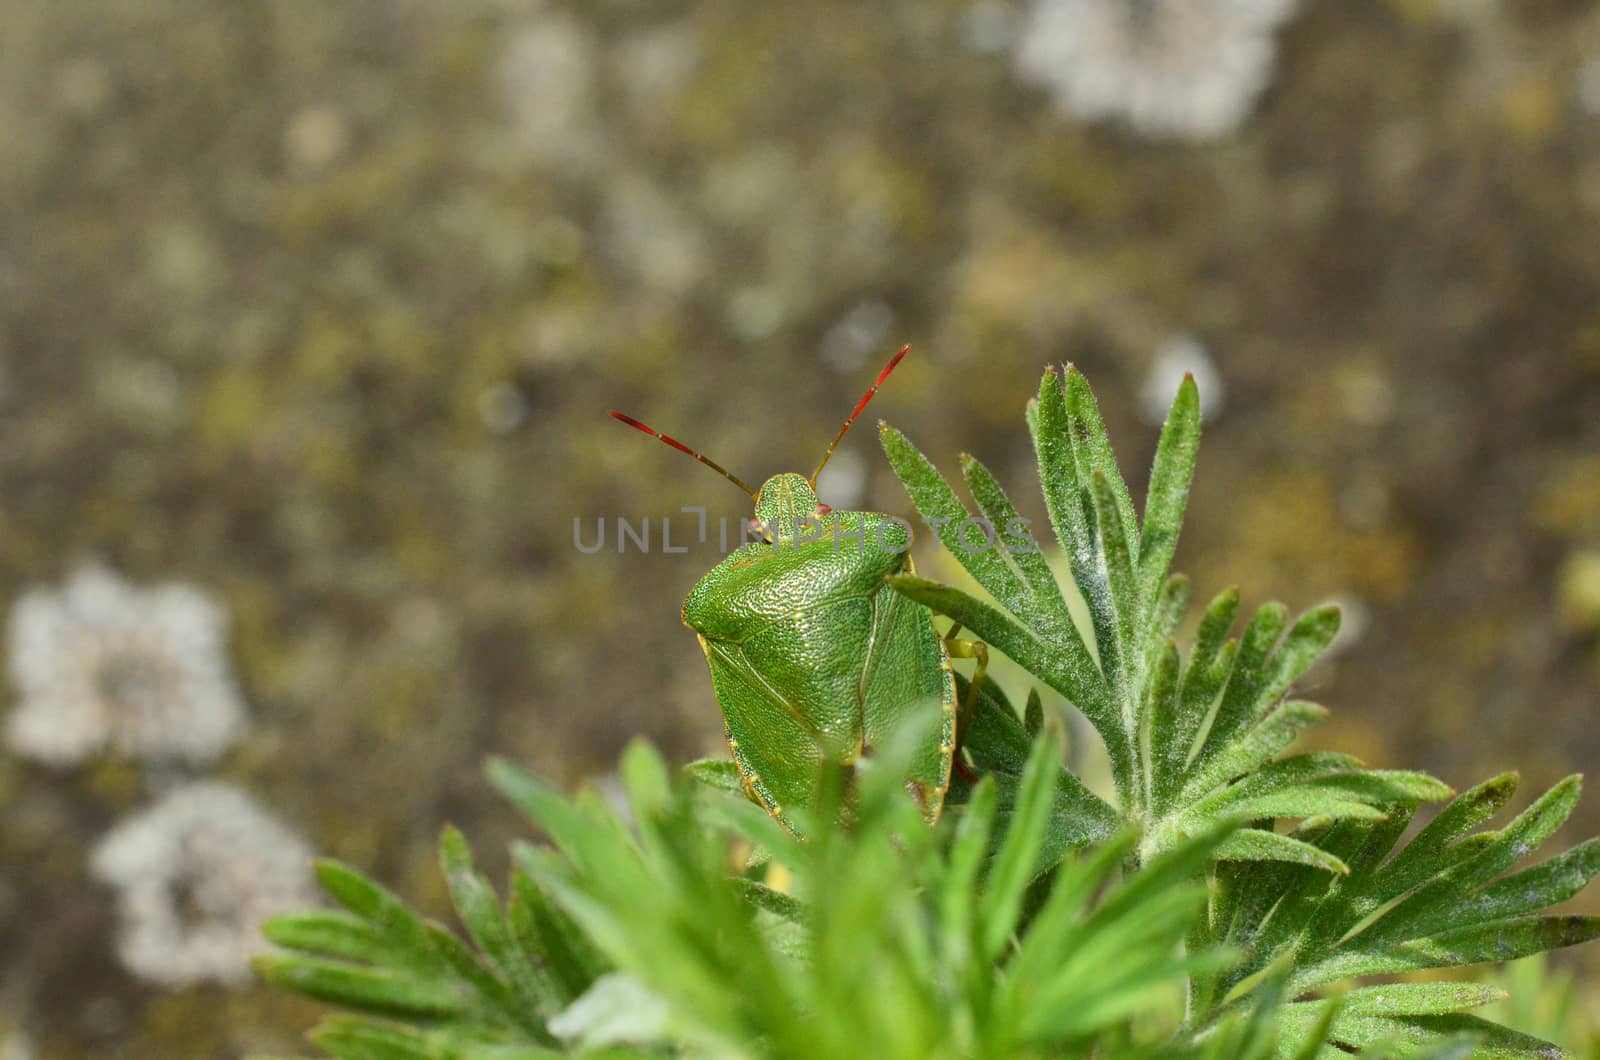 Close-up of a green shield bug, Palomena prasina, a harmless insect